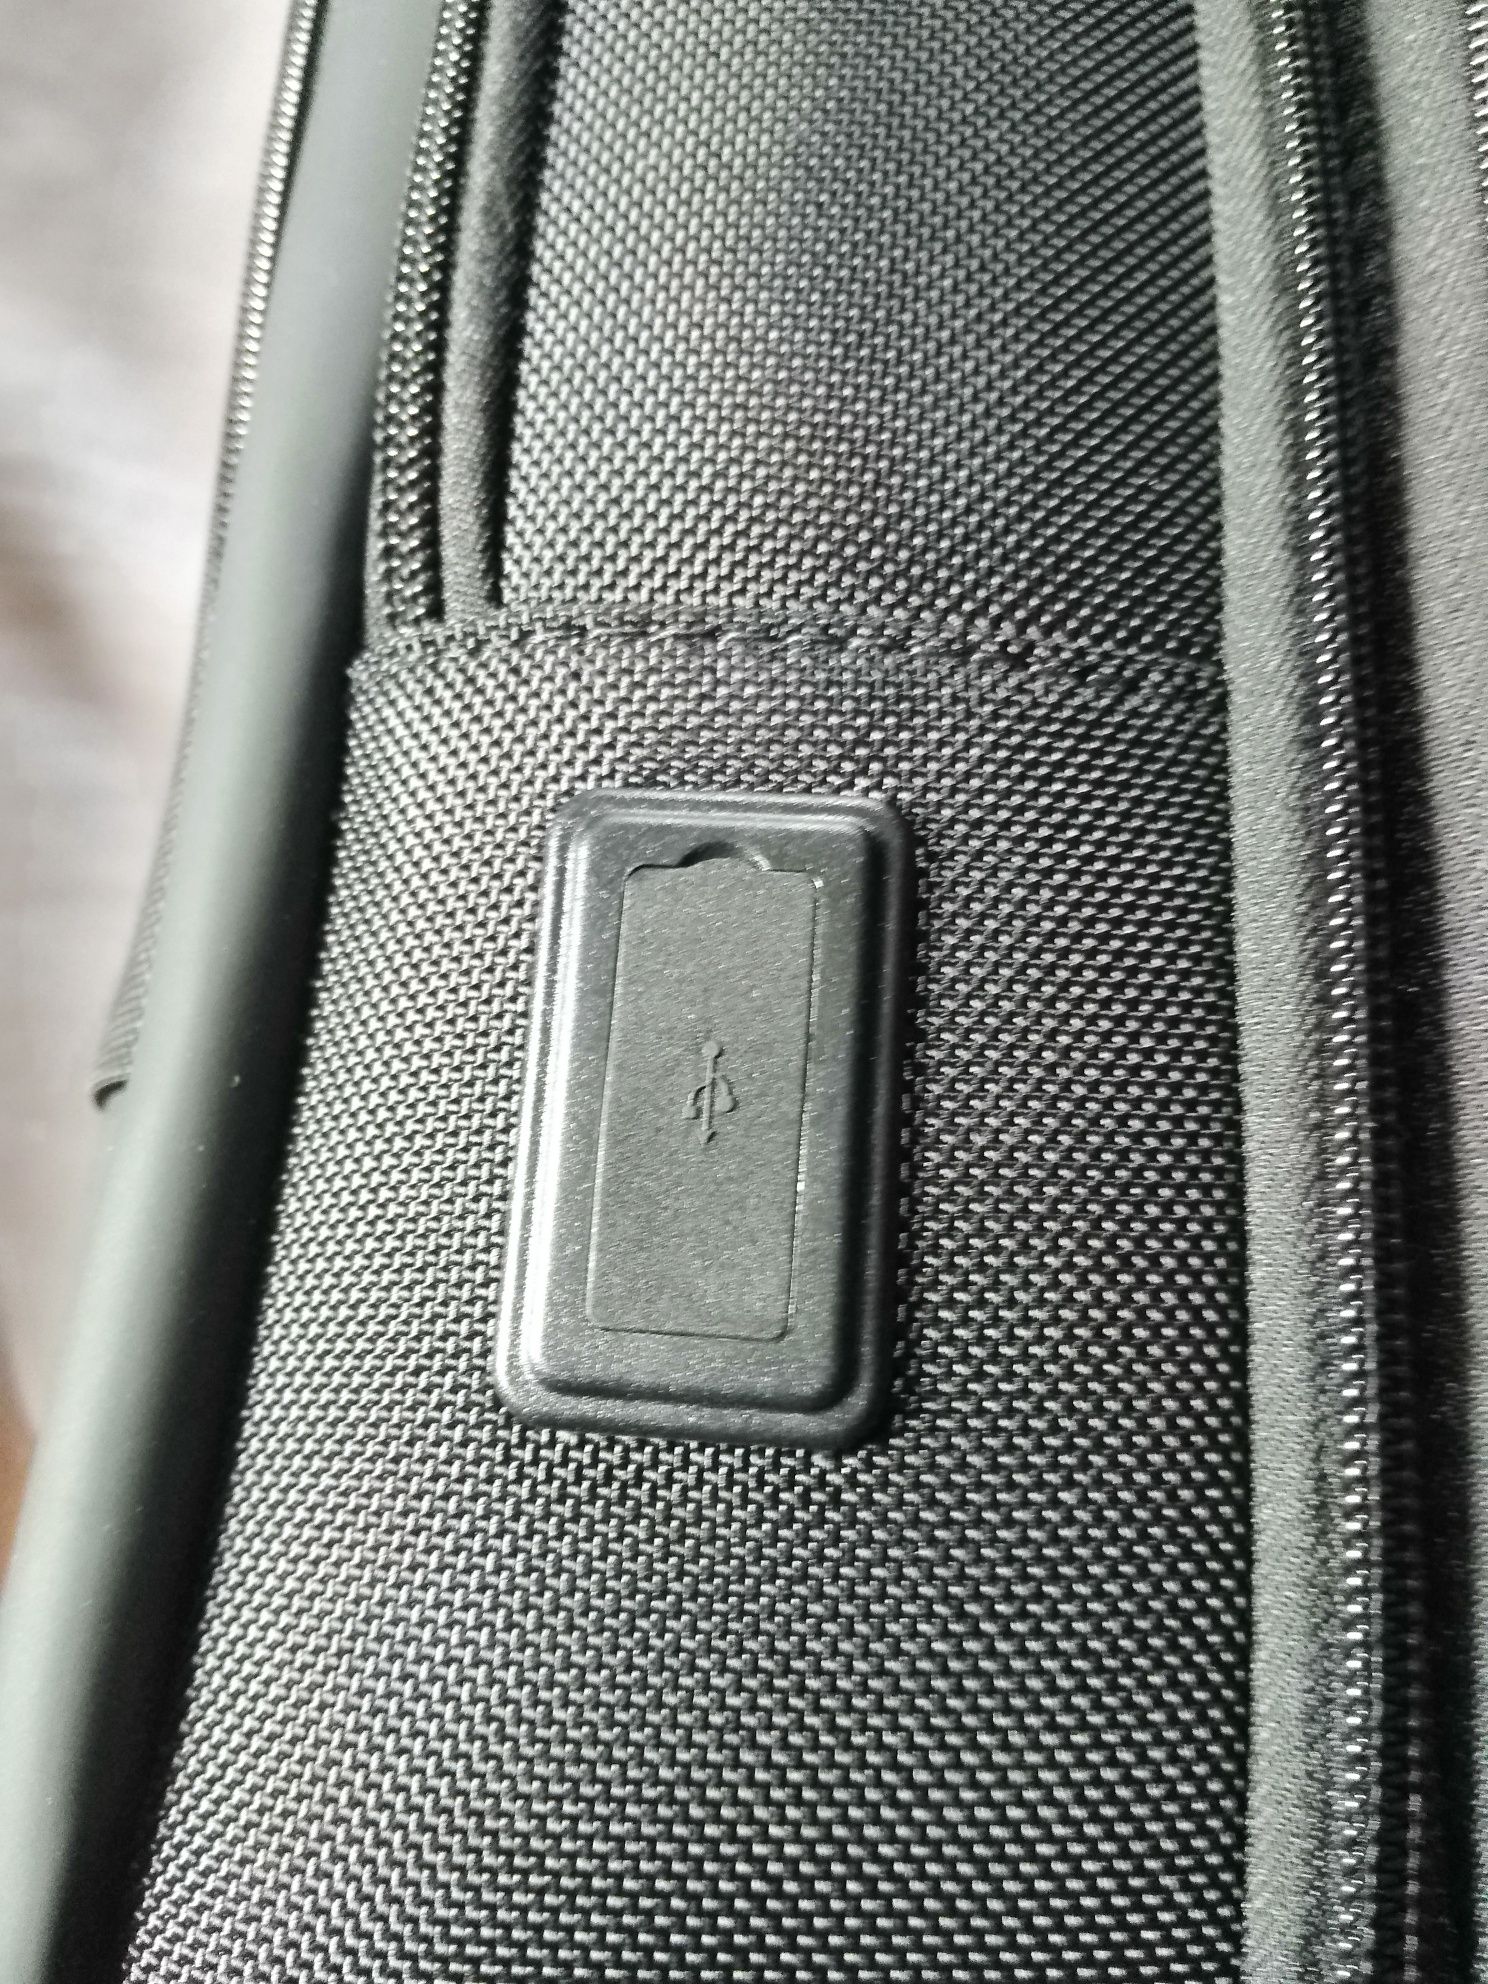 Plecak BOPAI z USB na laptop 15.6 cali